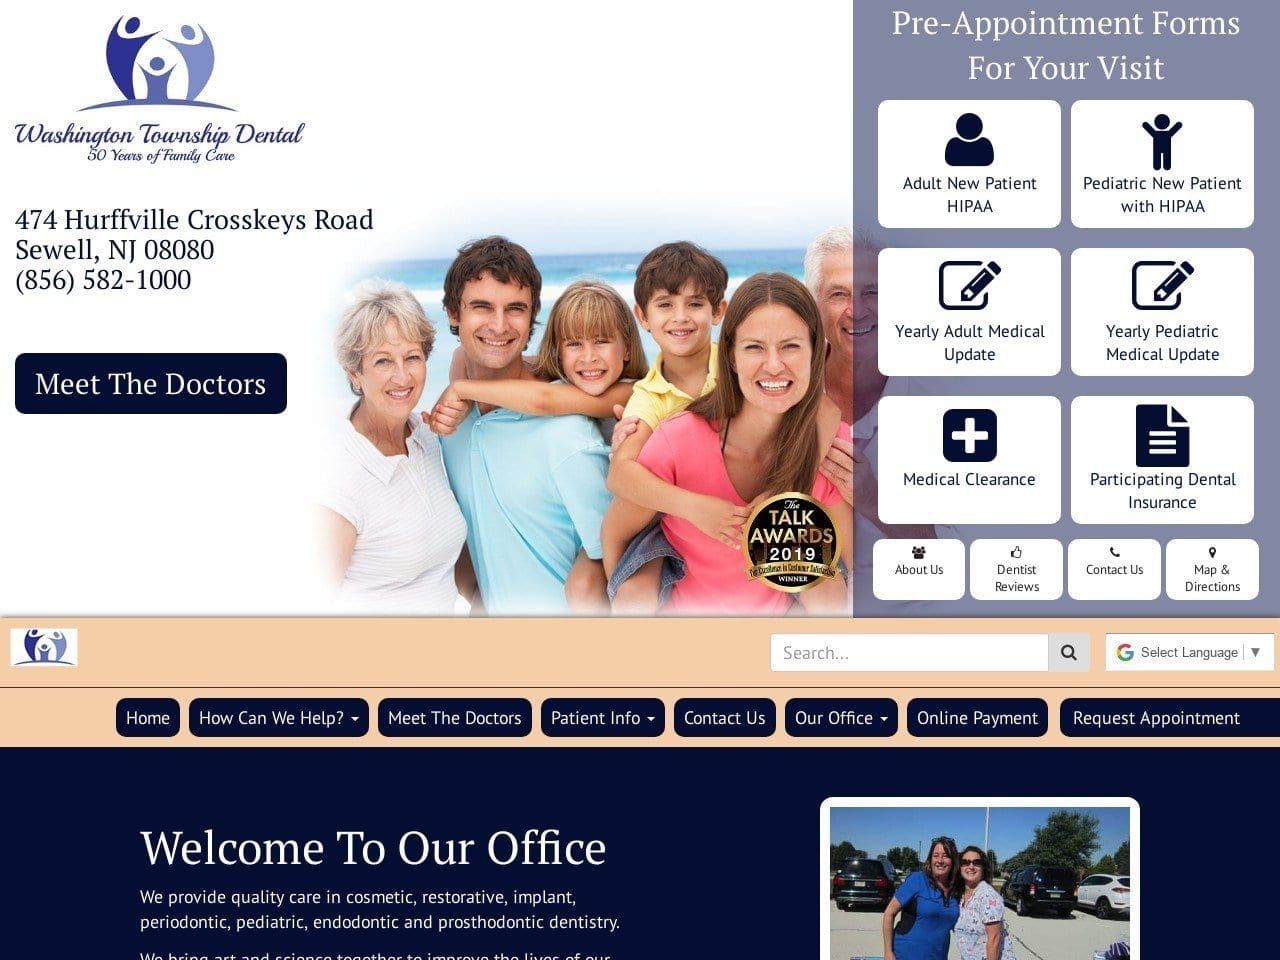 Washington Township Dental Website Screenshot from washingtontownshipdental.com